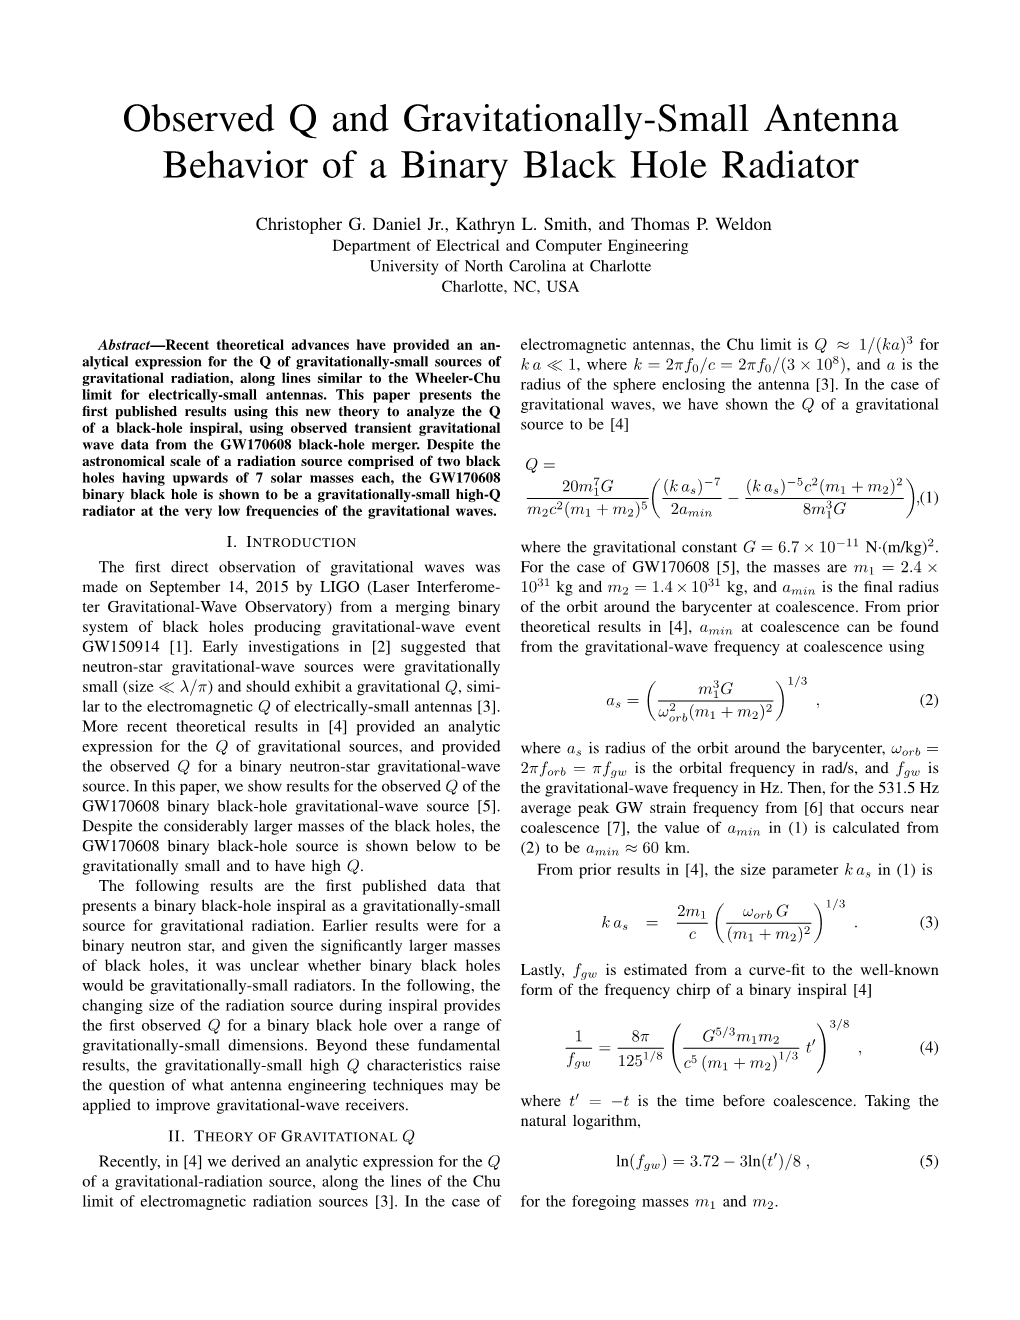 Observed Q and Gravitationally-Small Antenna Behavior of a Binary Black Hole Radiator